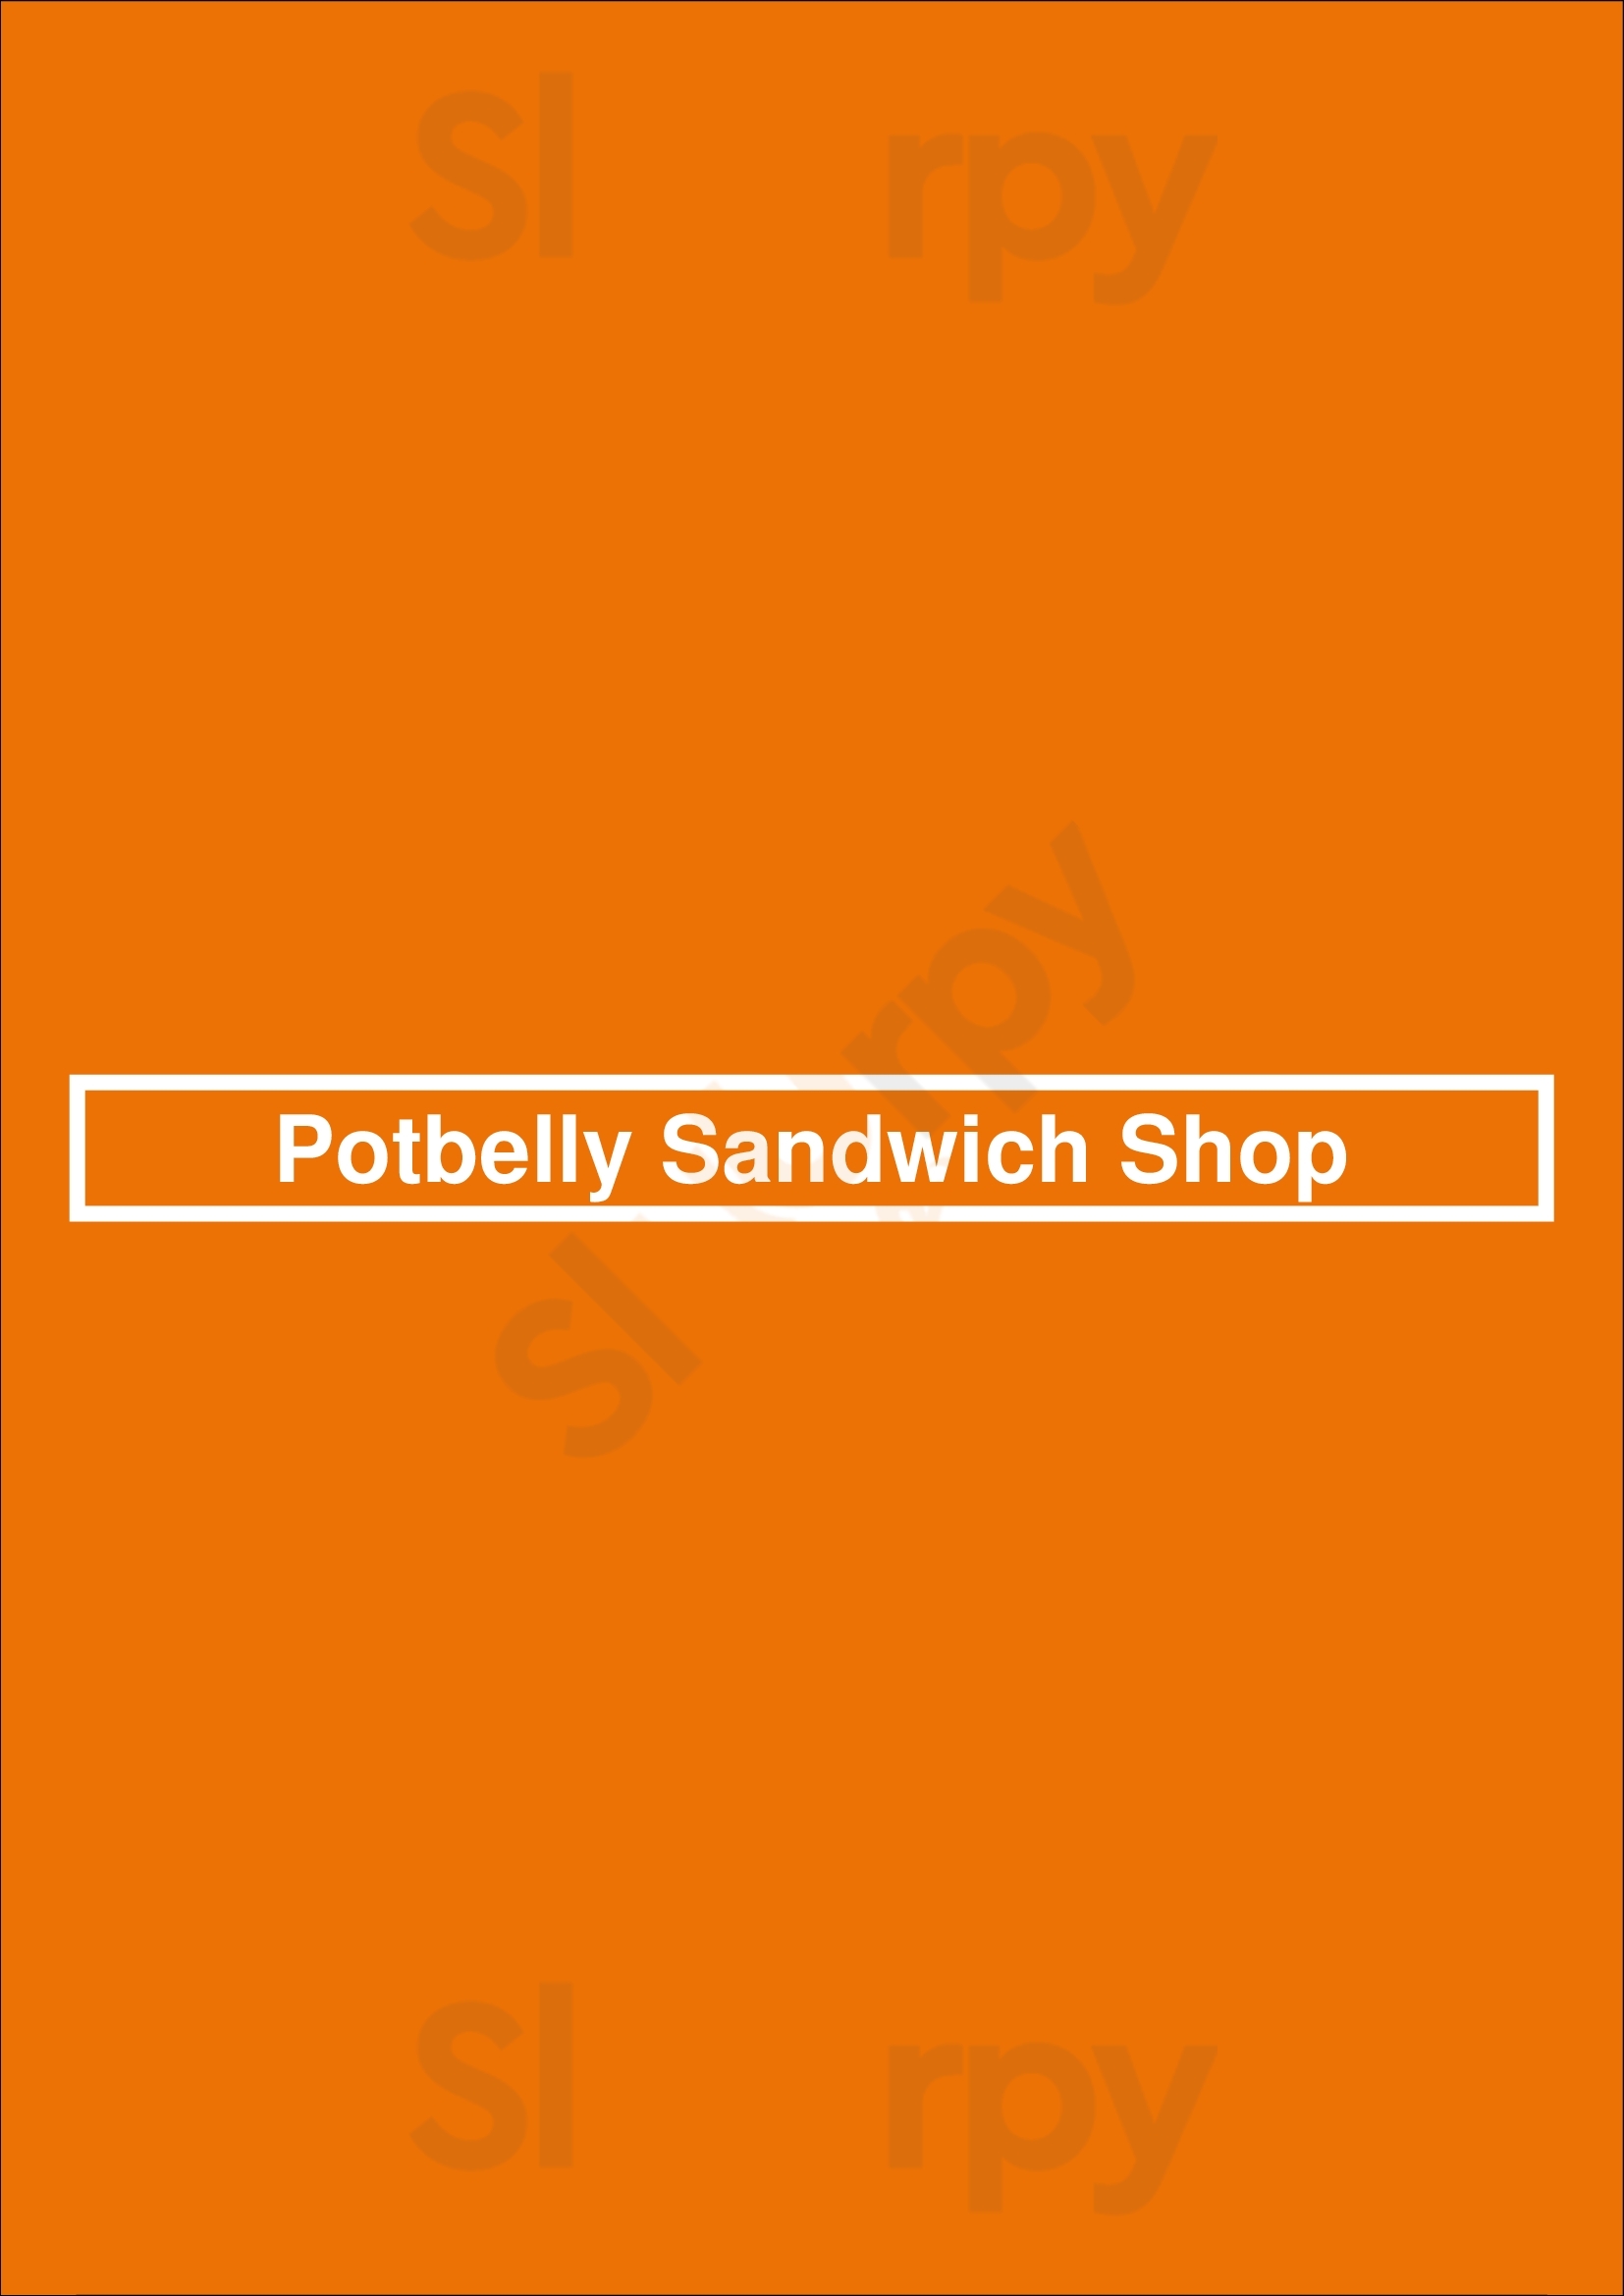 Potbelly Sandwich Shop Arlington Menu - 1